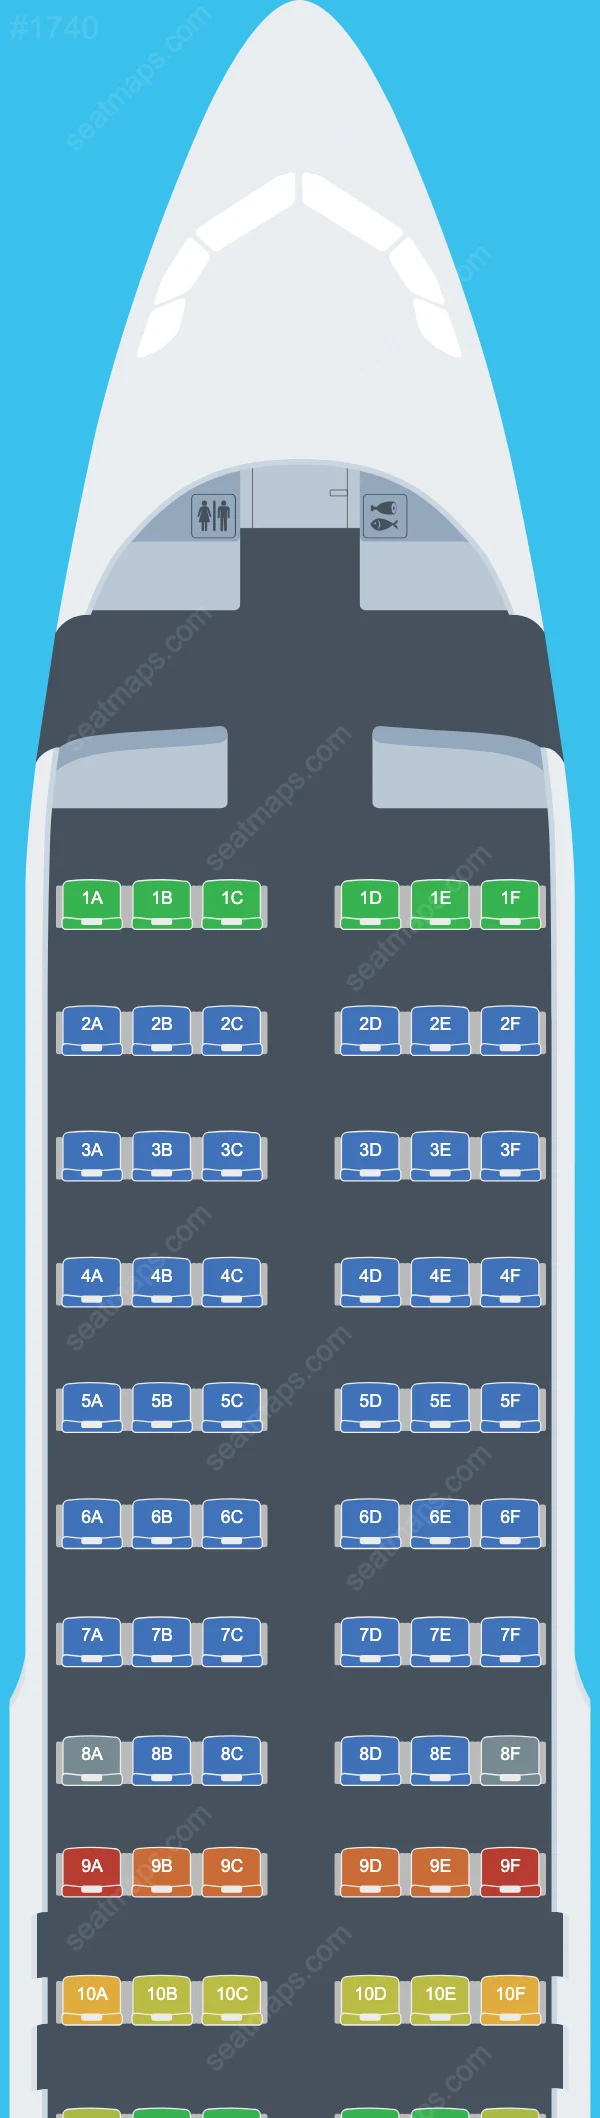 JetBlue Airways Airbus A320 Seat Maps A320-200 V.2